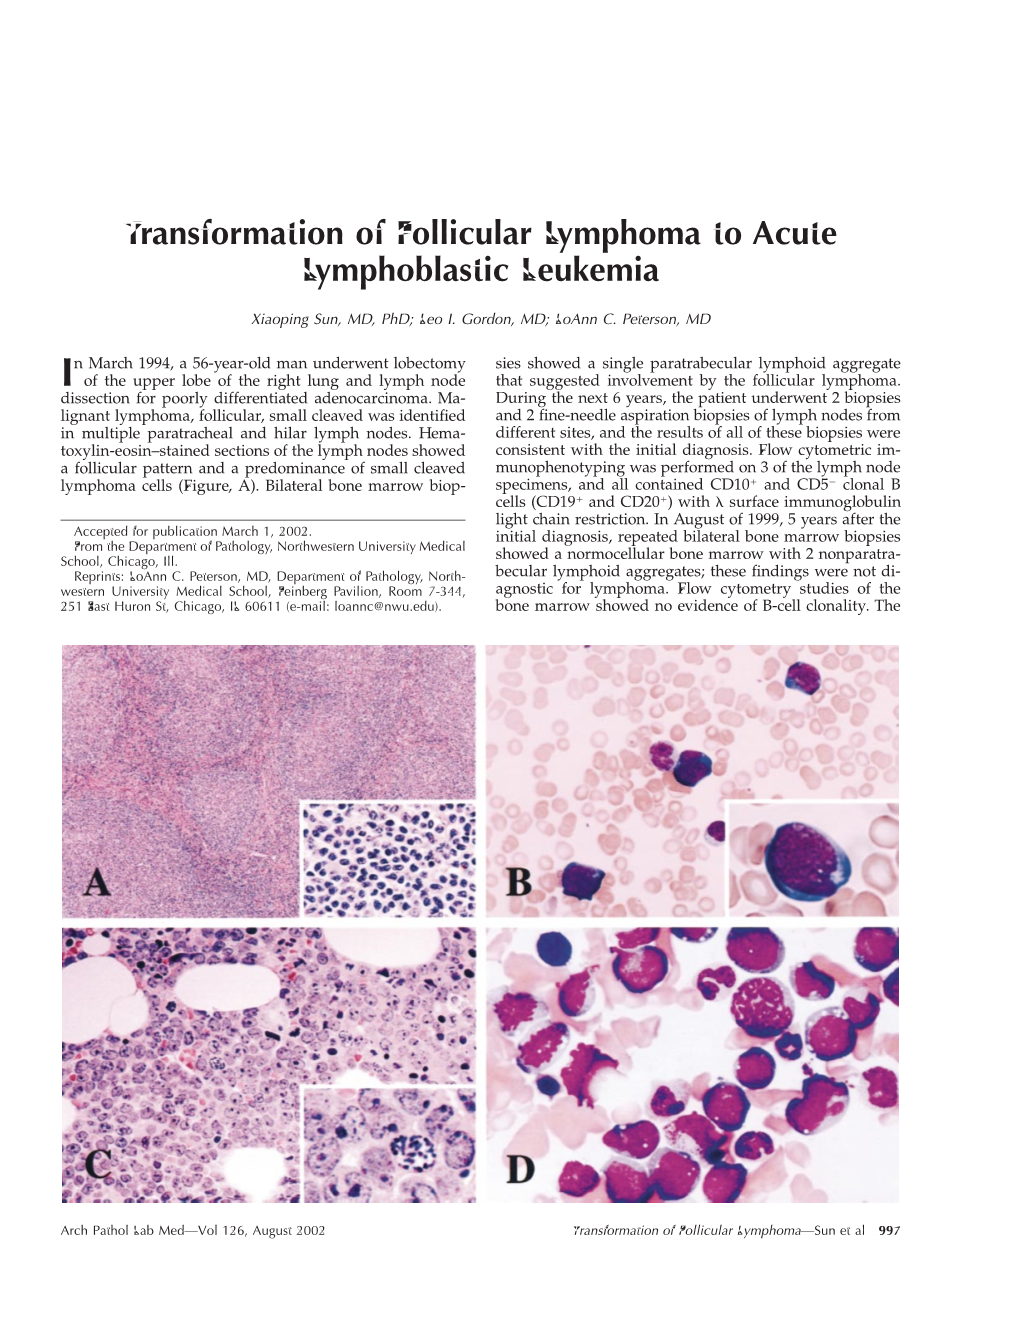 Transformation of Follicular Lymphoma to Acute Lymphoblastic Leukemia